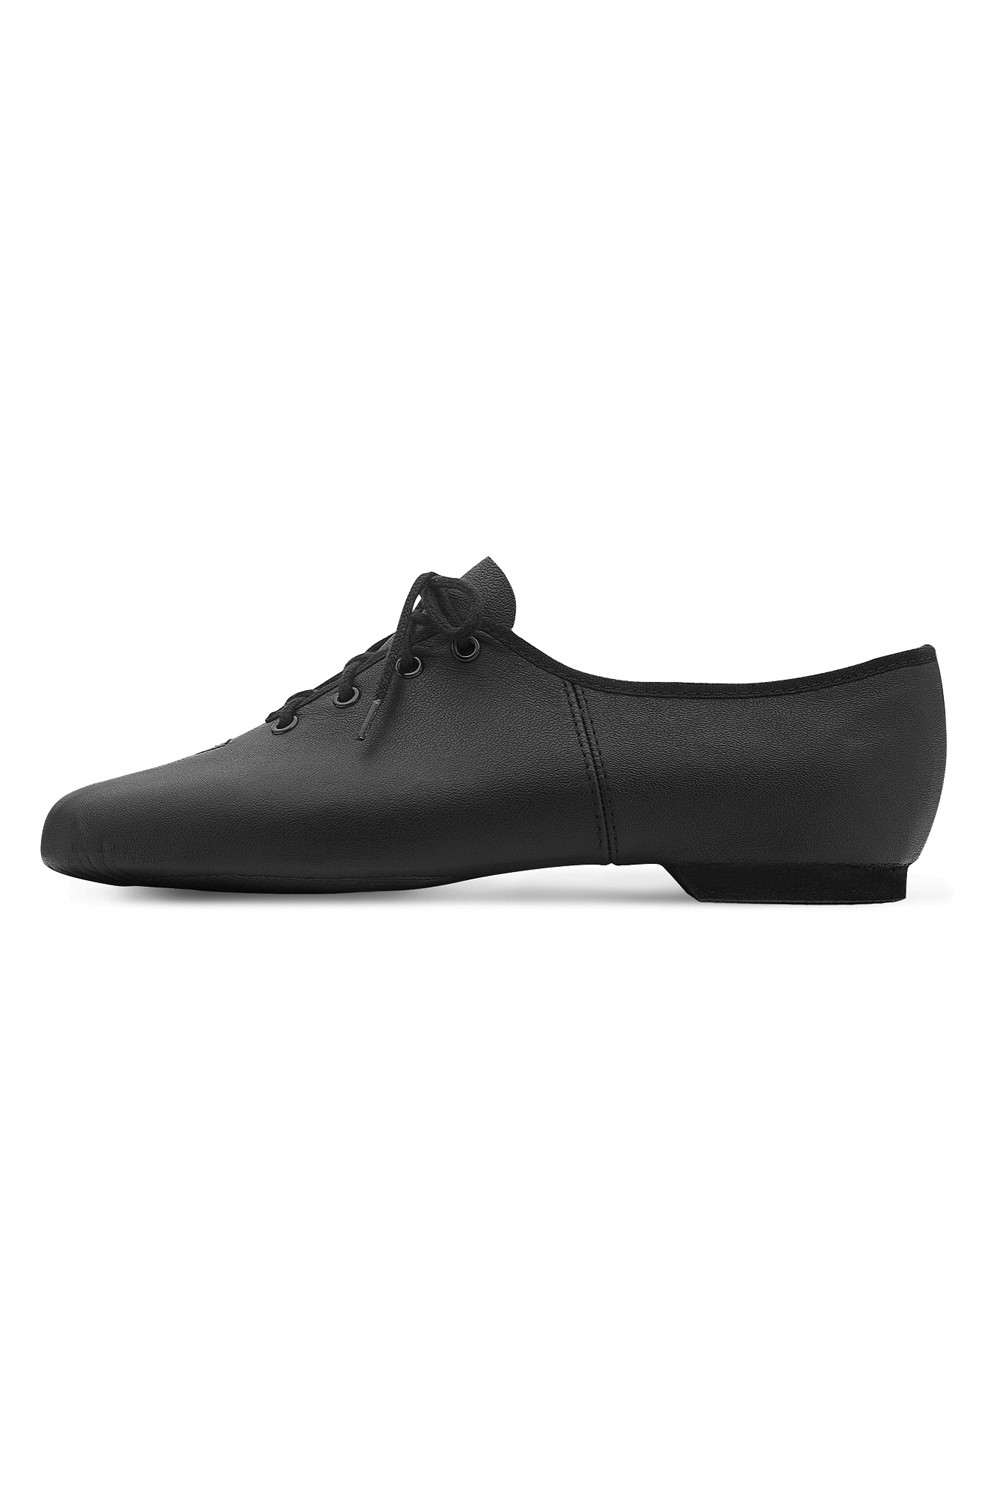 BLOCH® Girl's Jazz Dance Shoes - BLOCH® US Store